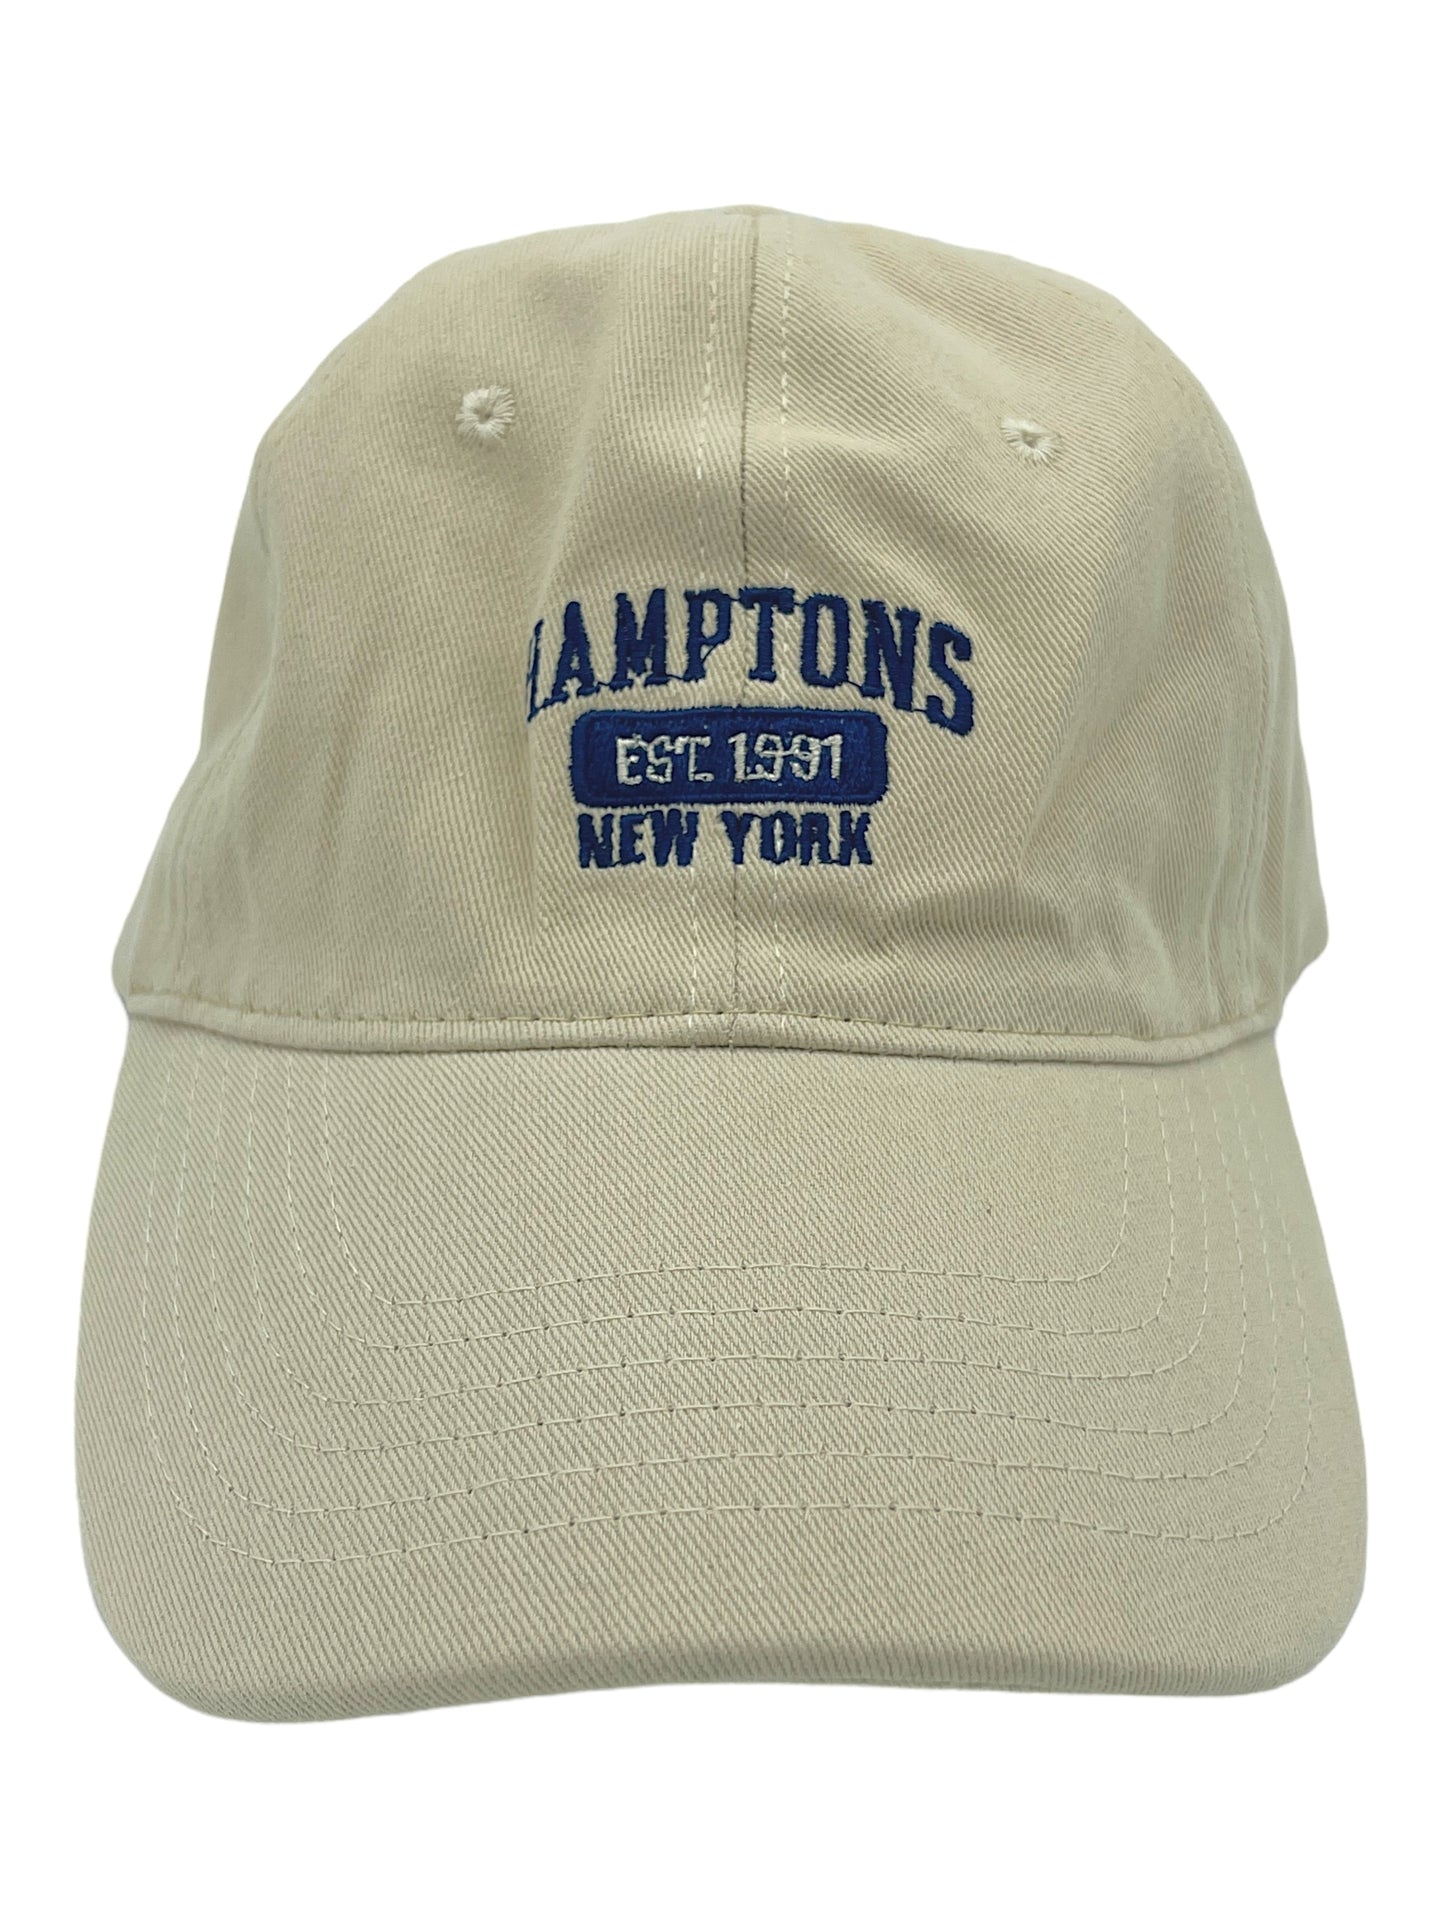 “HAMPTONS, NEW YORK” Adjustable Dad Cap